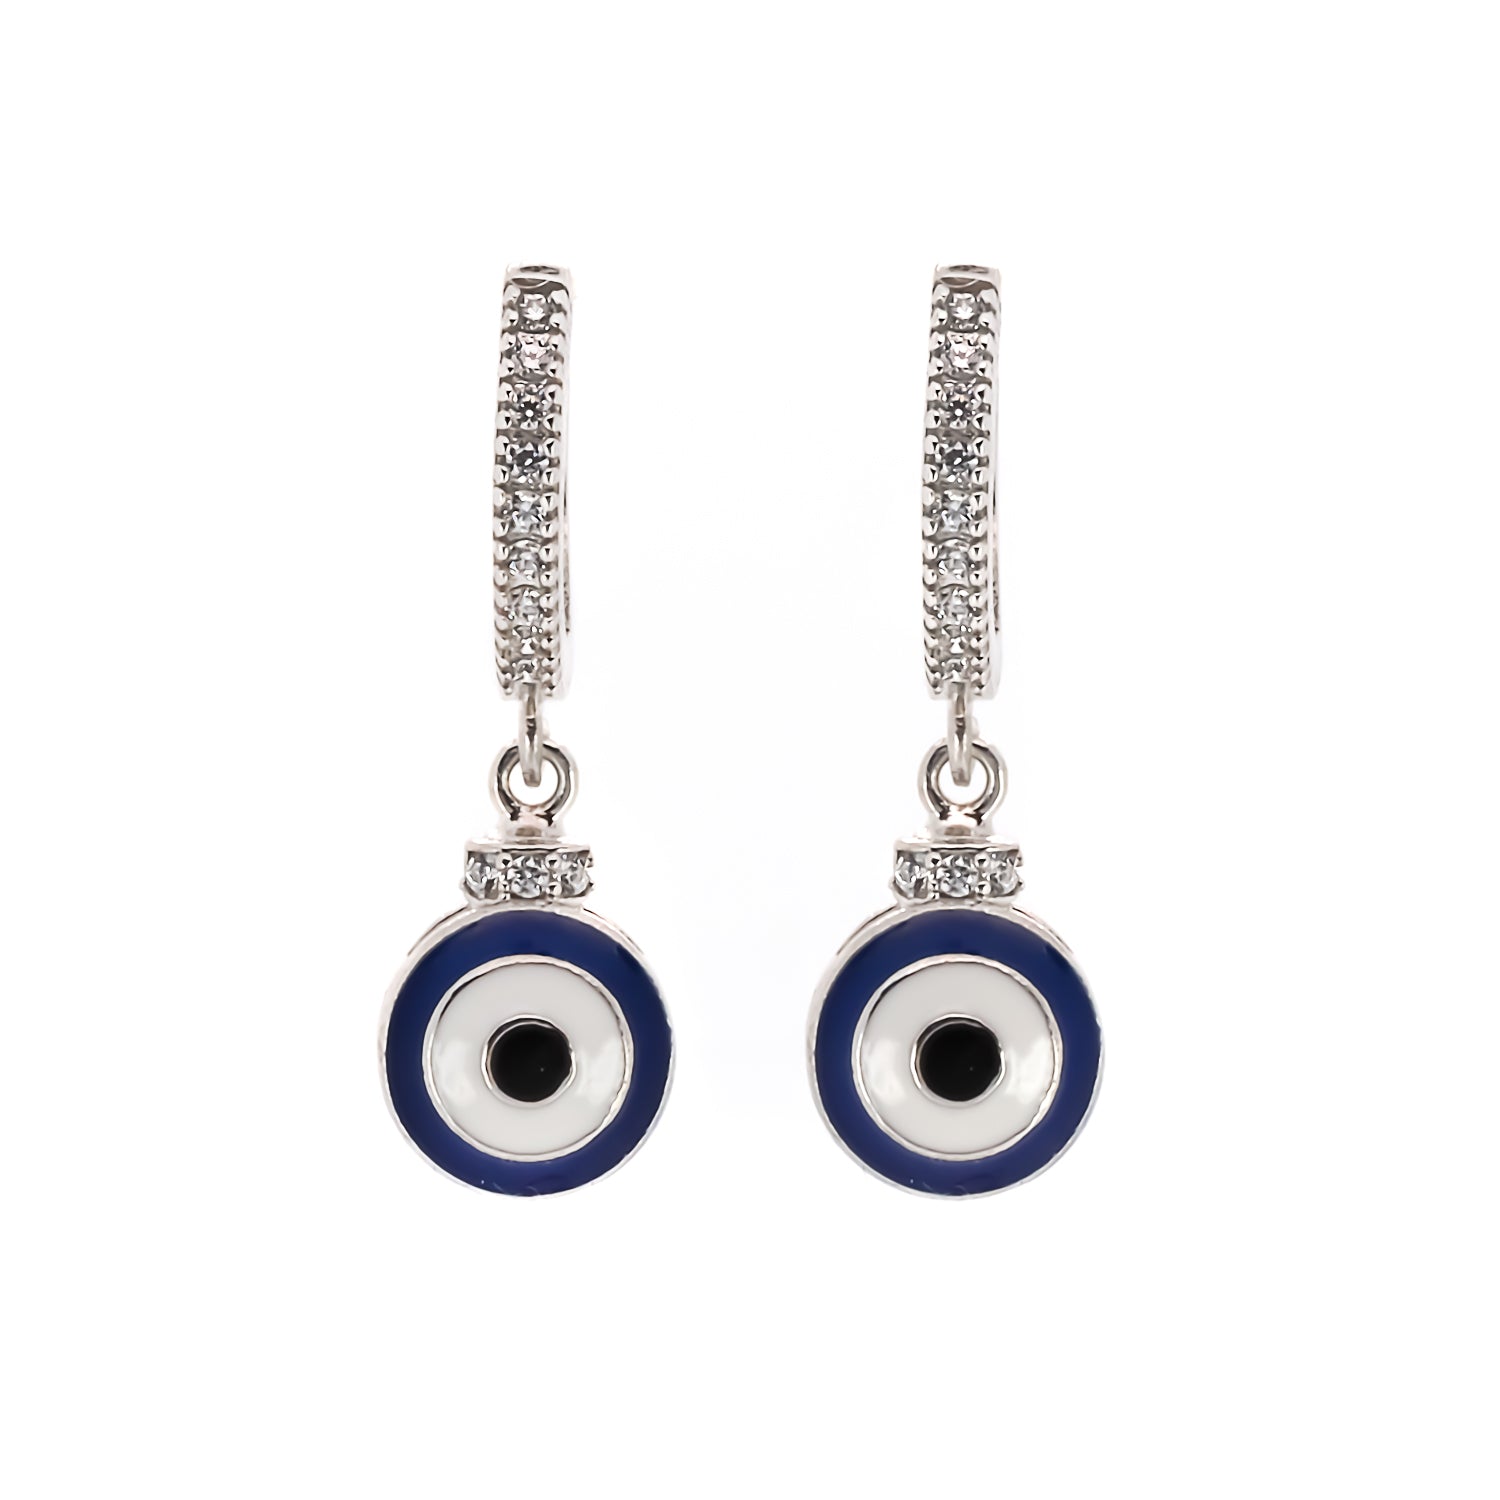 Blue Evil Eye Sterling Silver Earrings with zircon stones and enamel charm